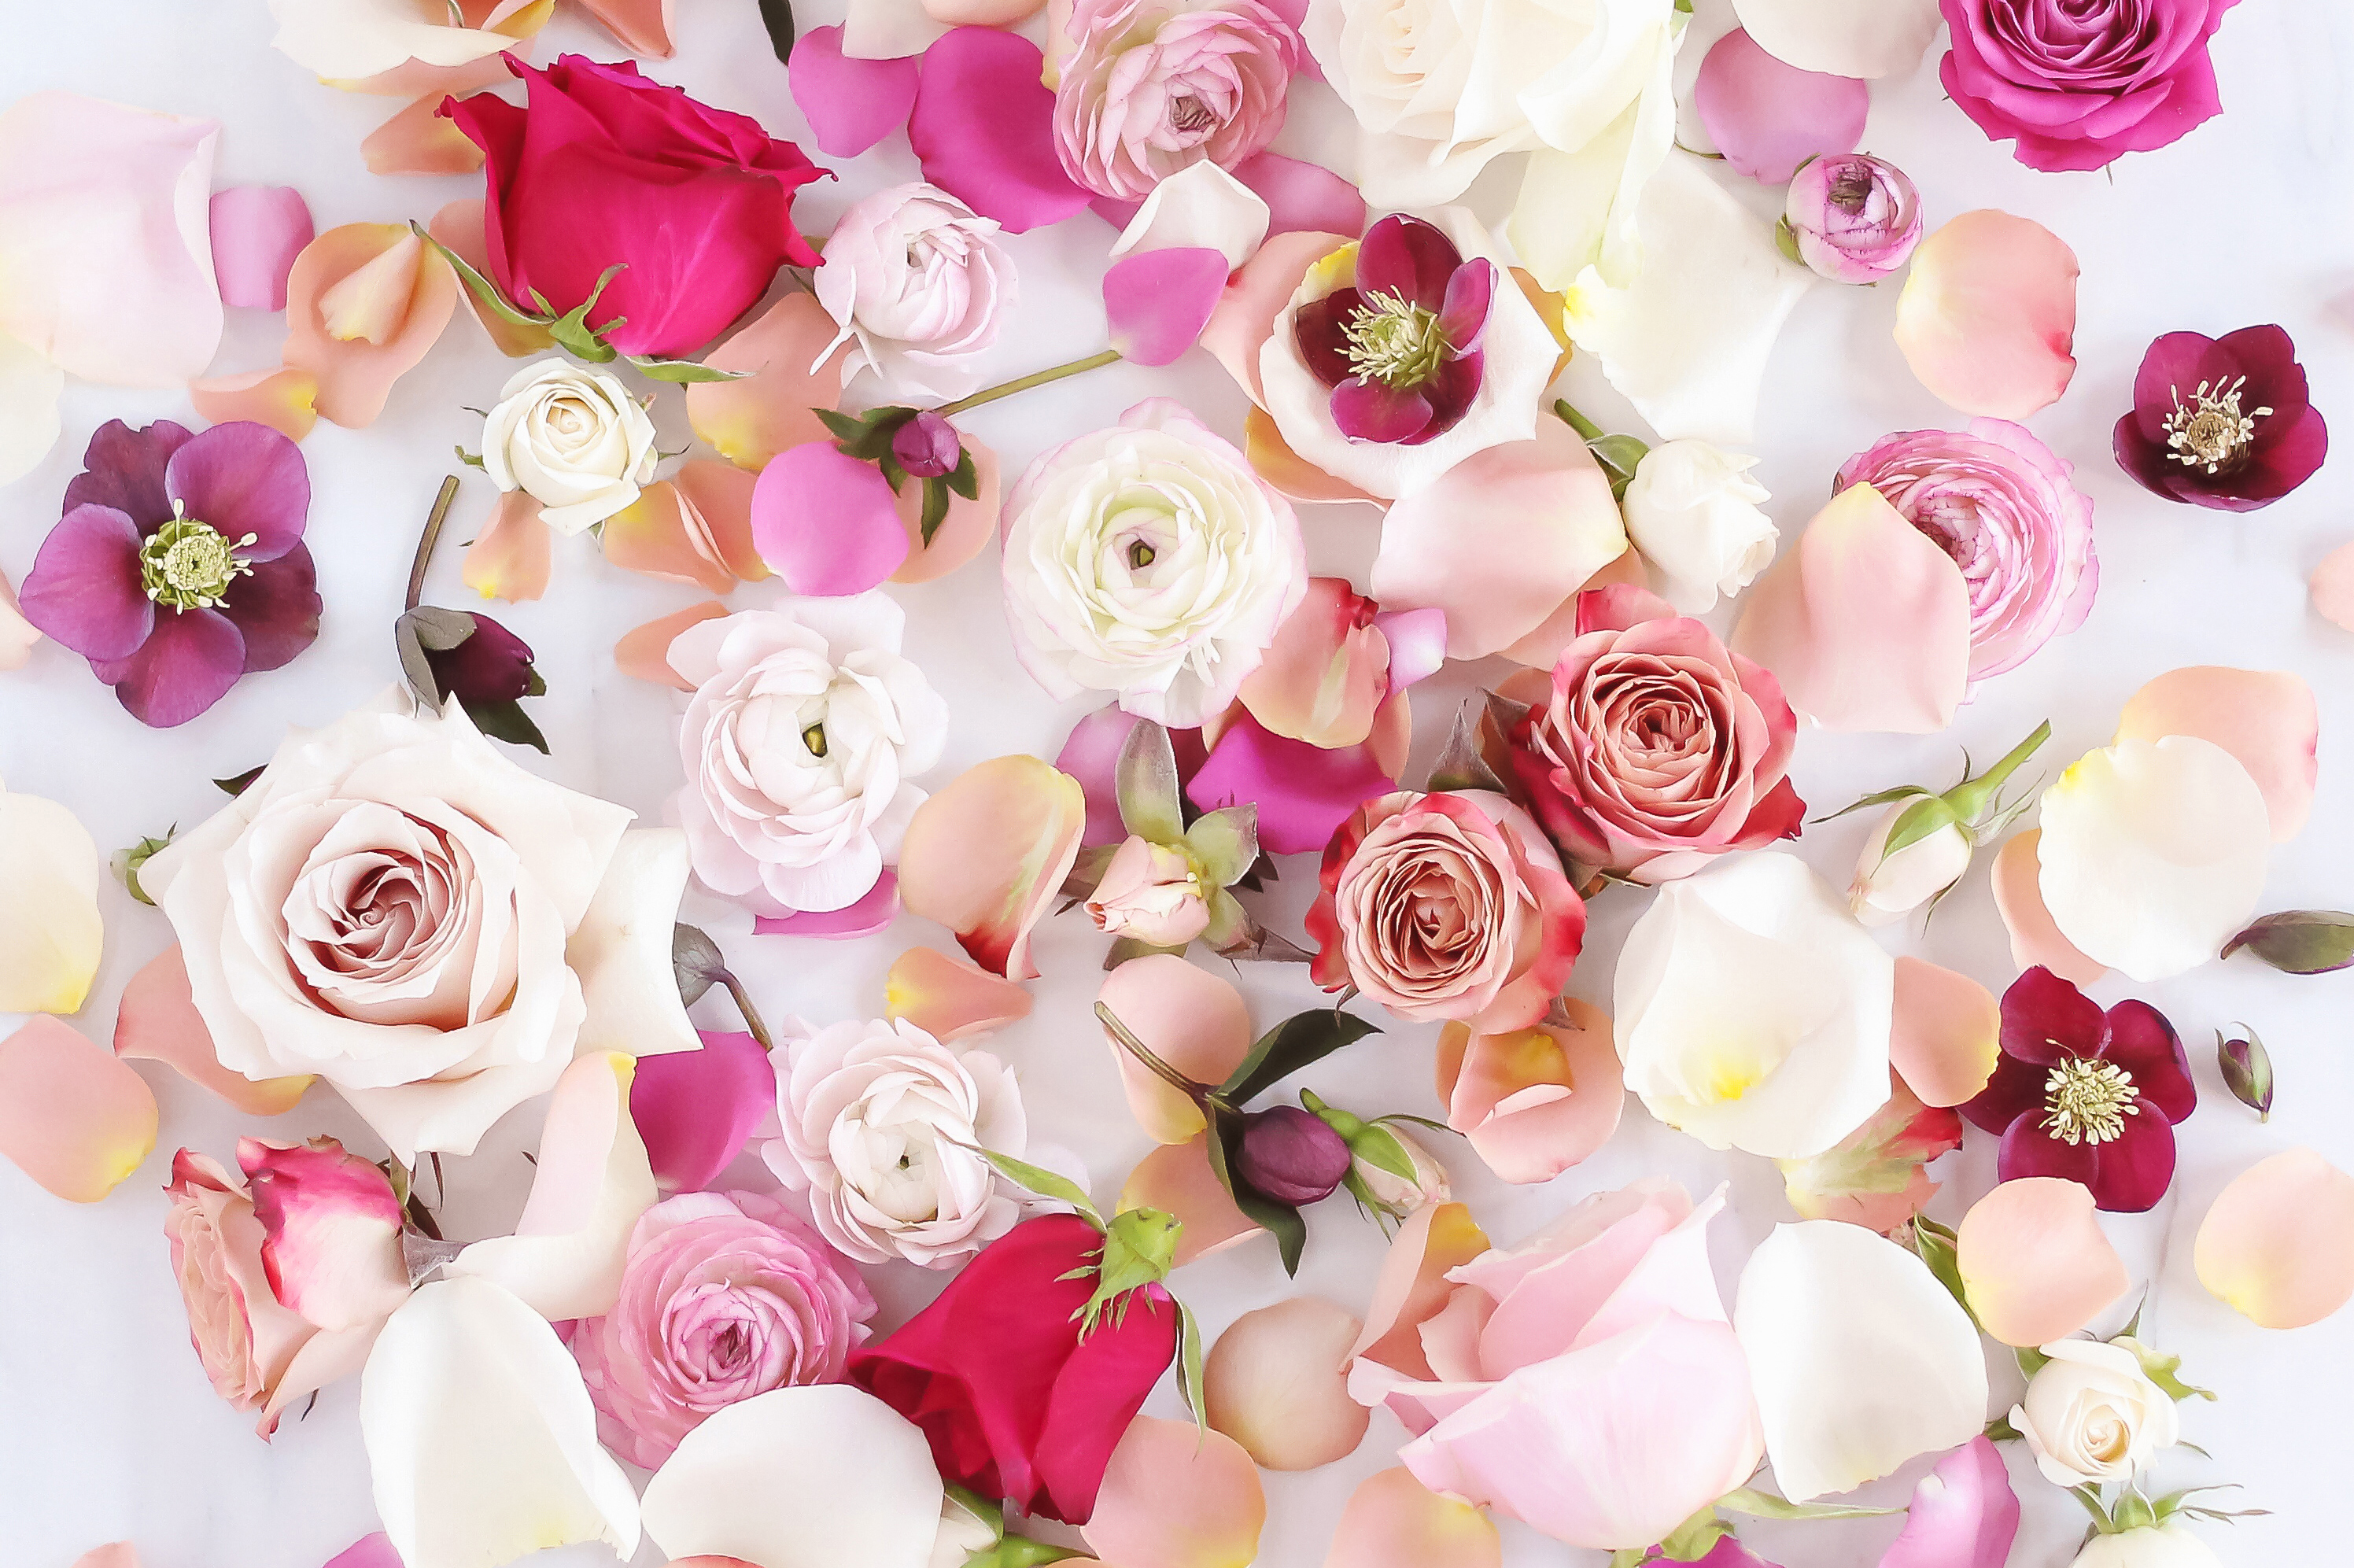 Digital blooms february free desktop wallpaper